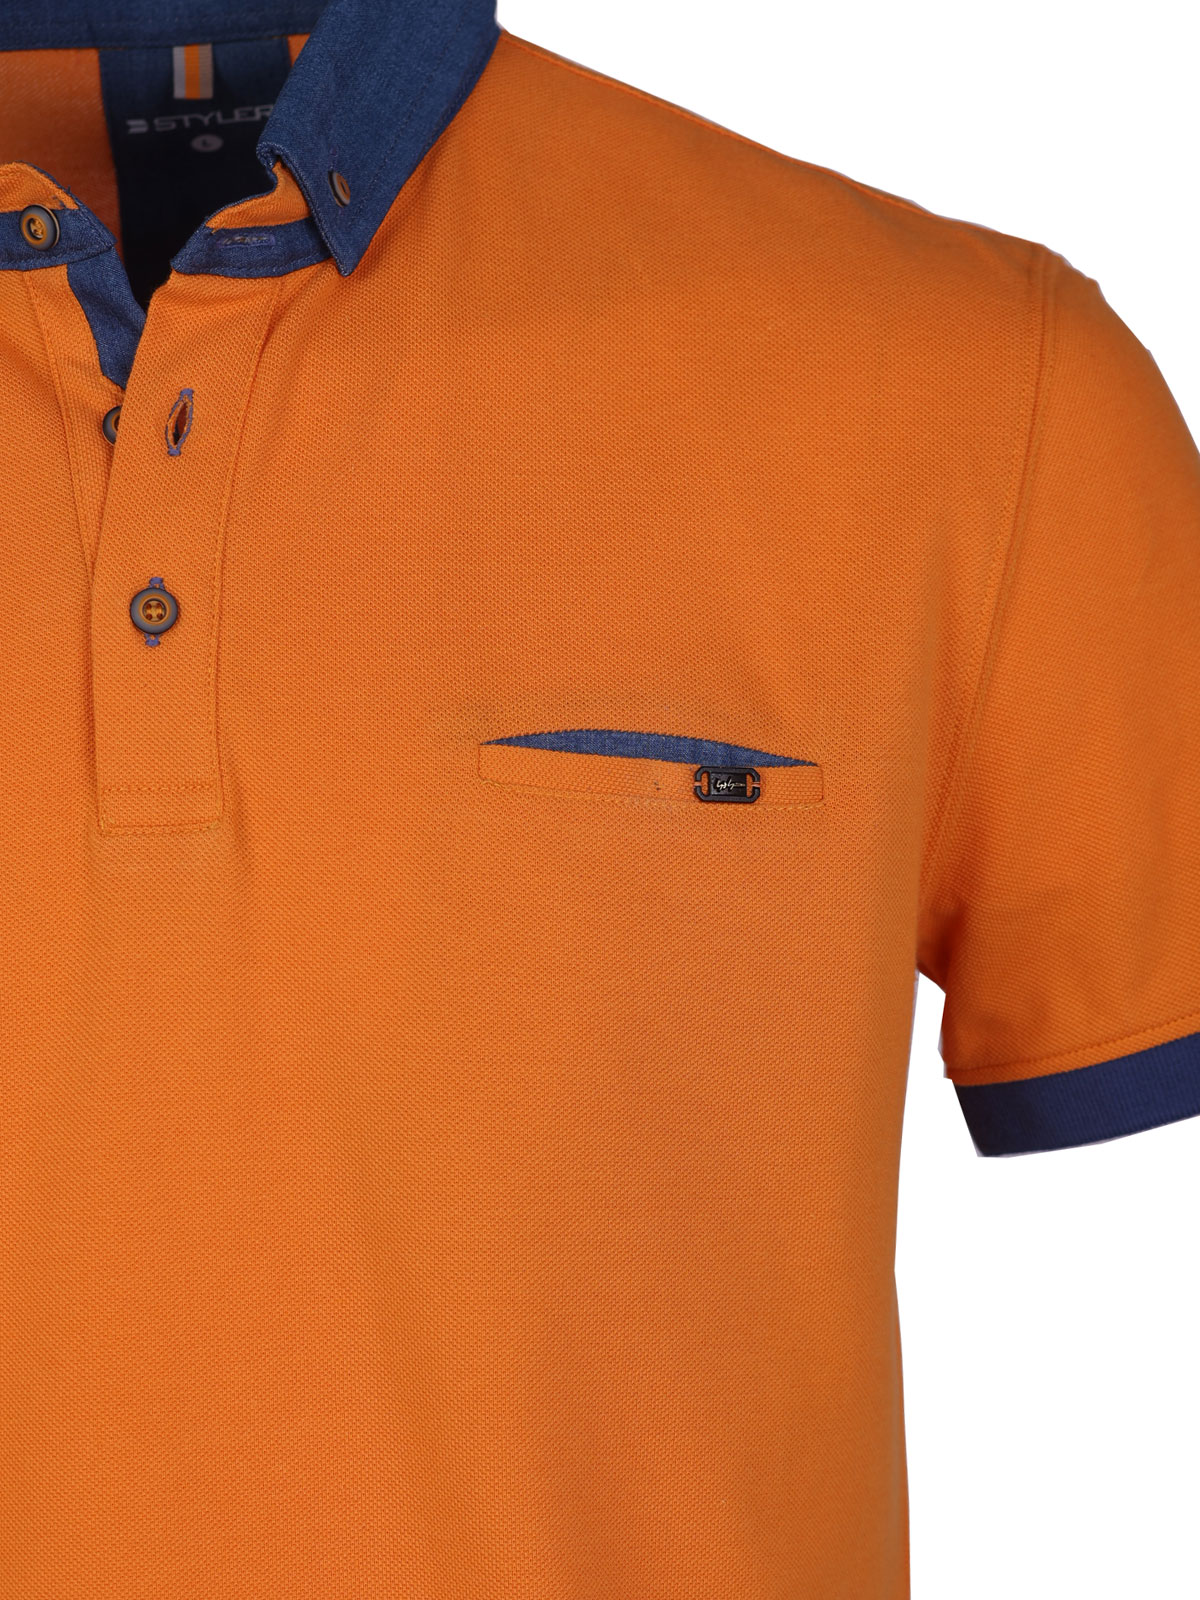 Blouse in orange with denim collar - 93431 € 42.74 img2